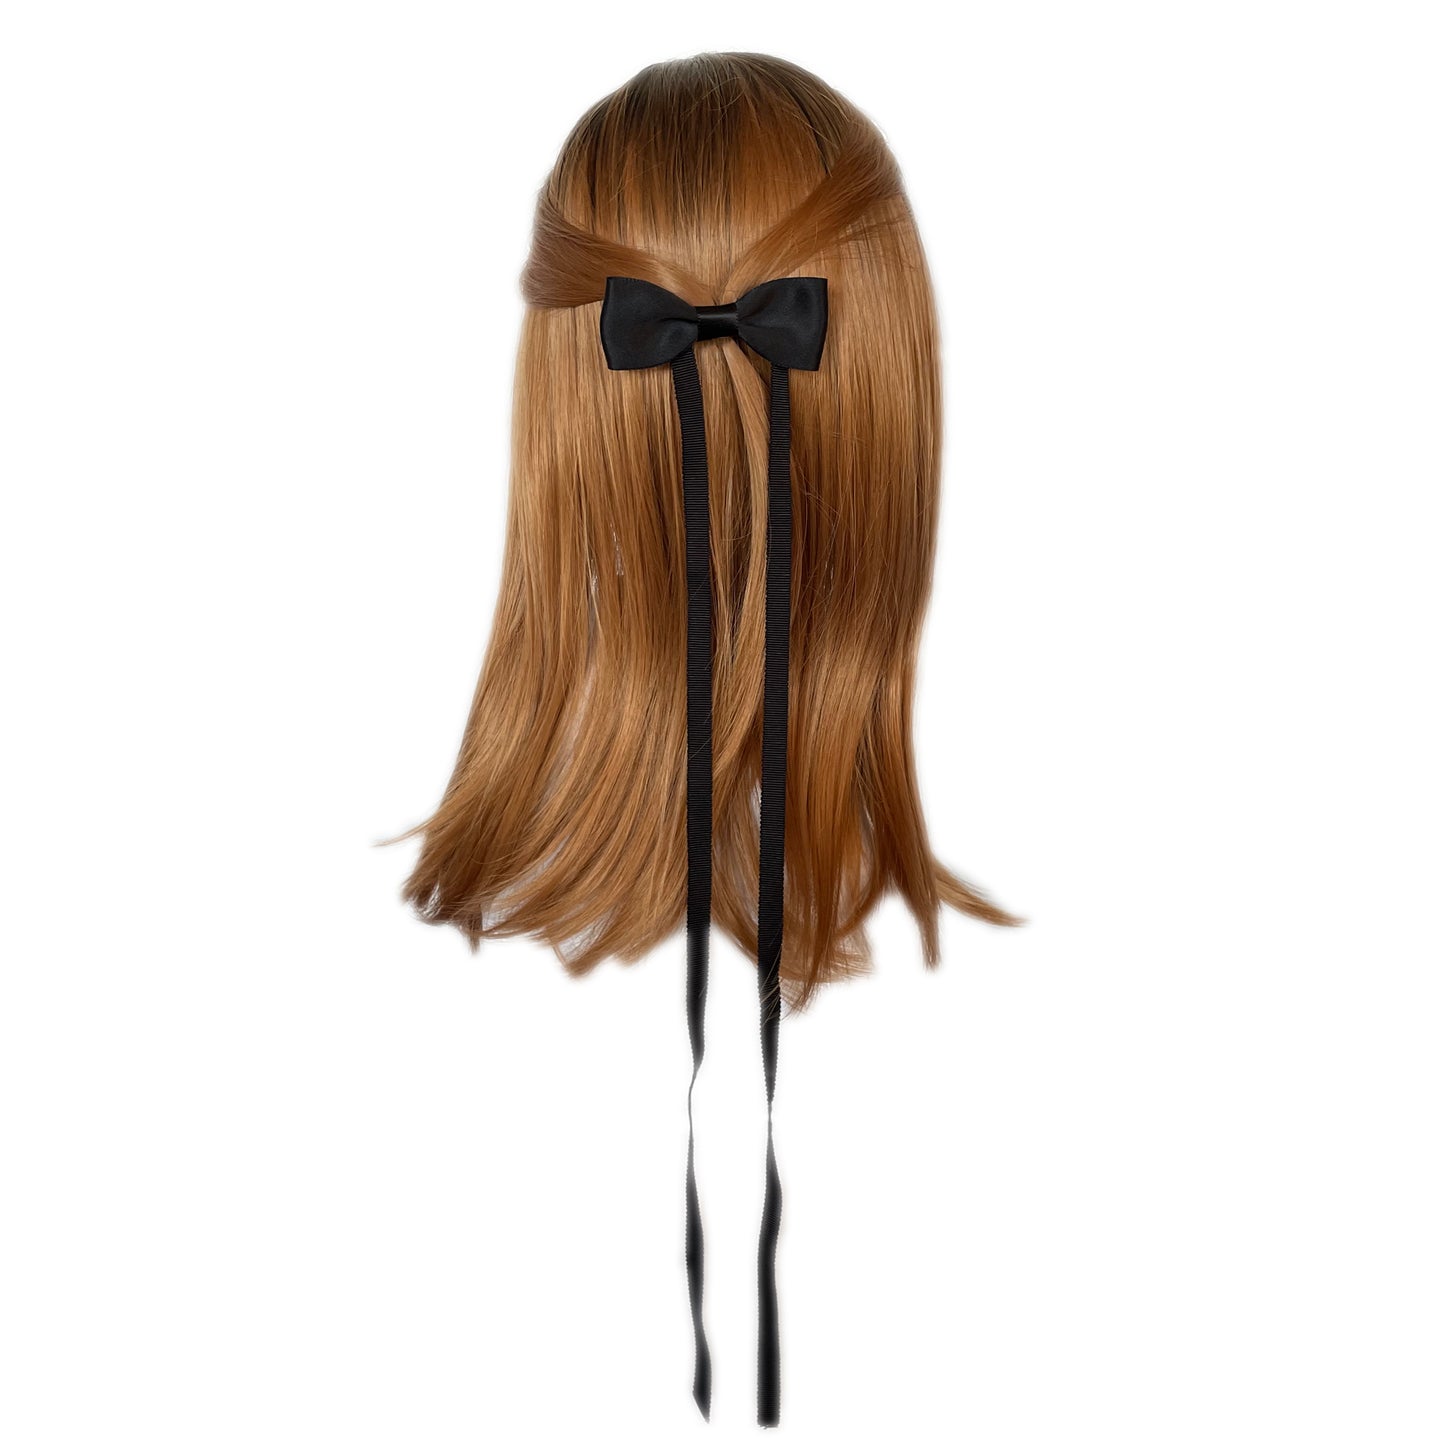 Black satin fashion hair bow accessory.